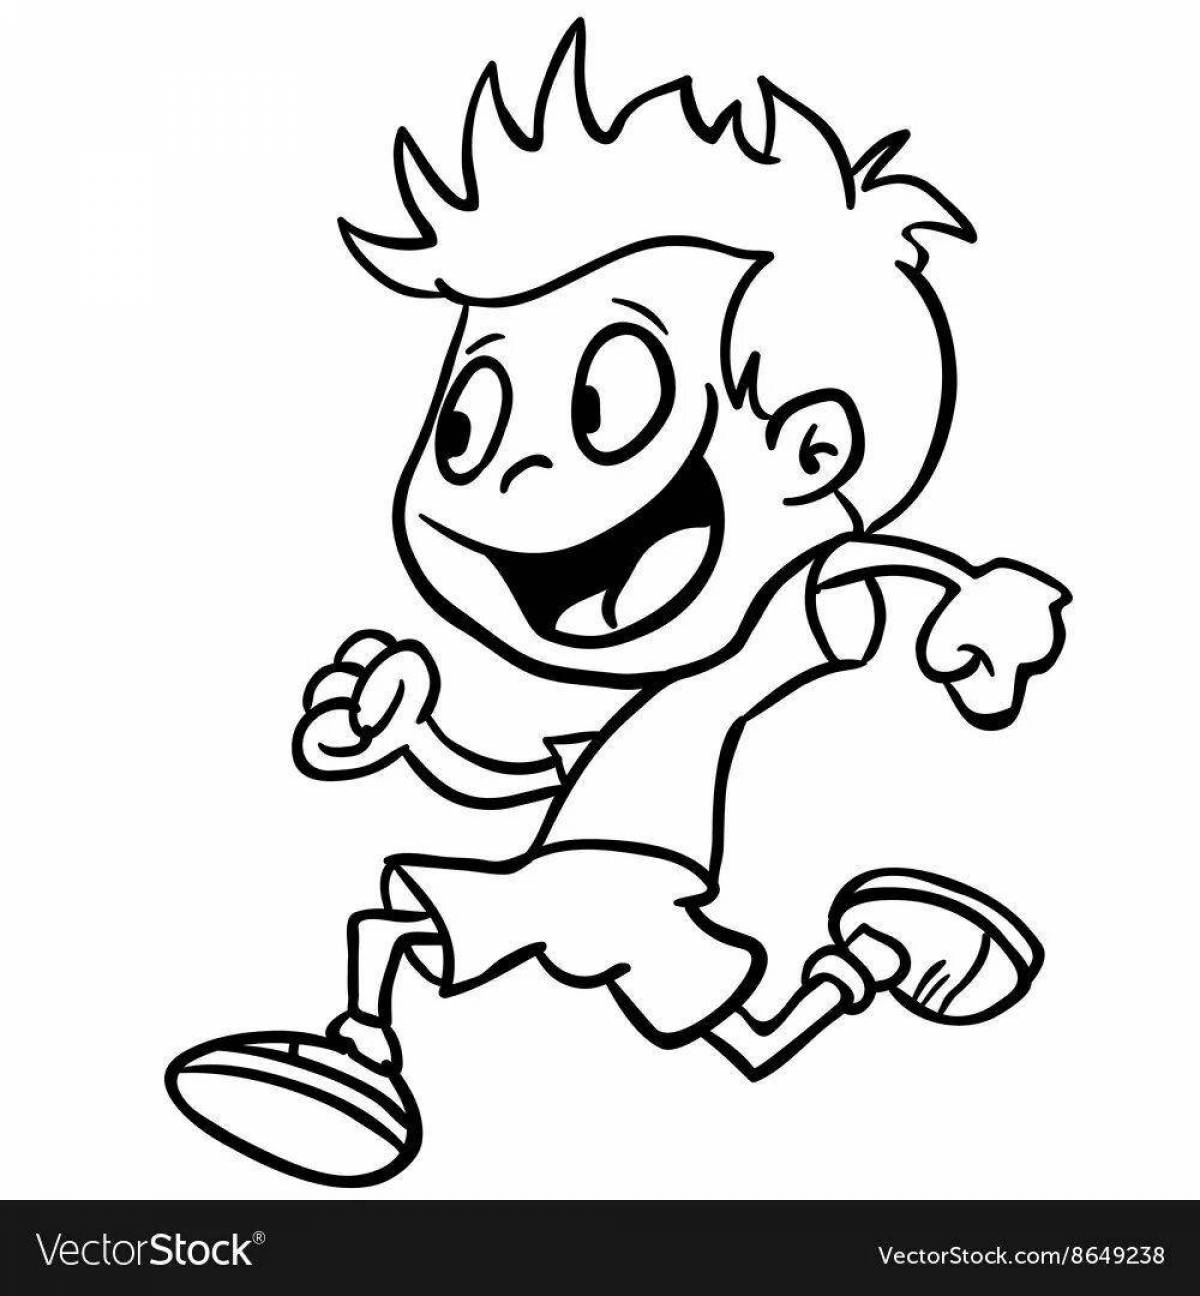 Coloring page joyful running boy